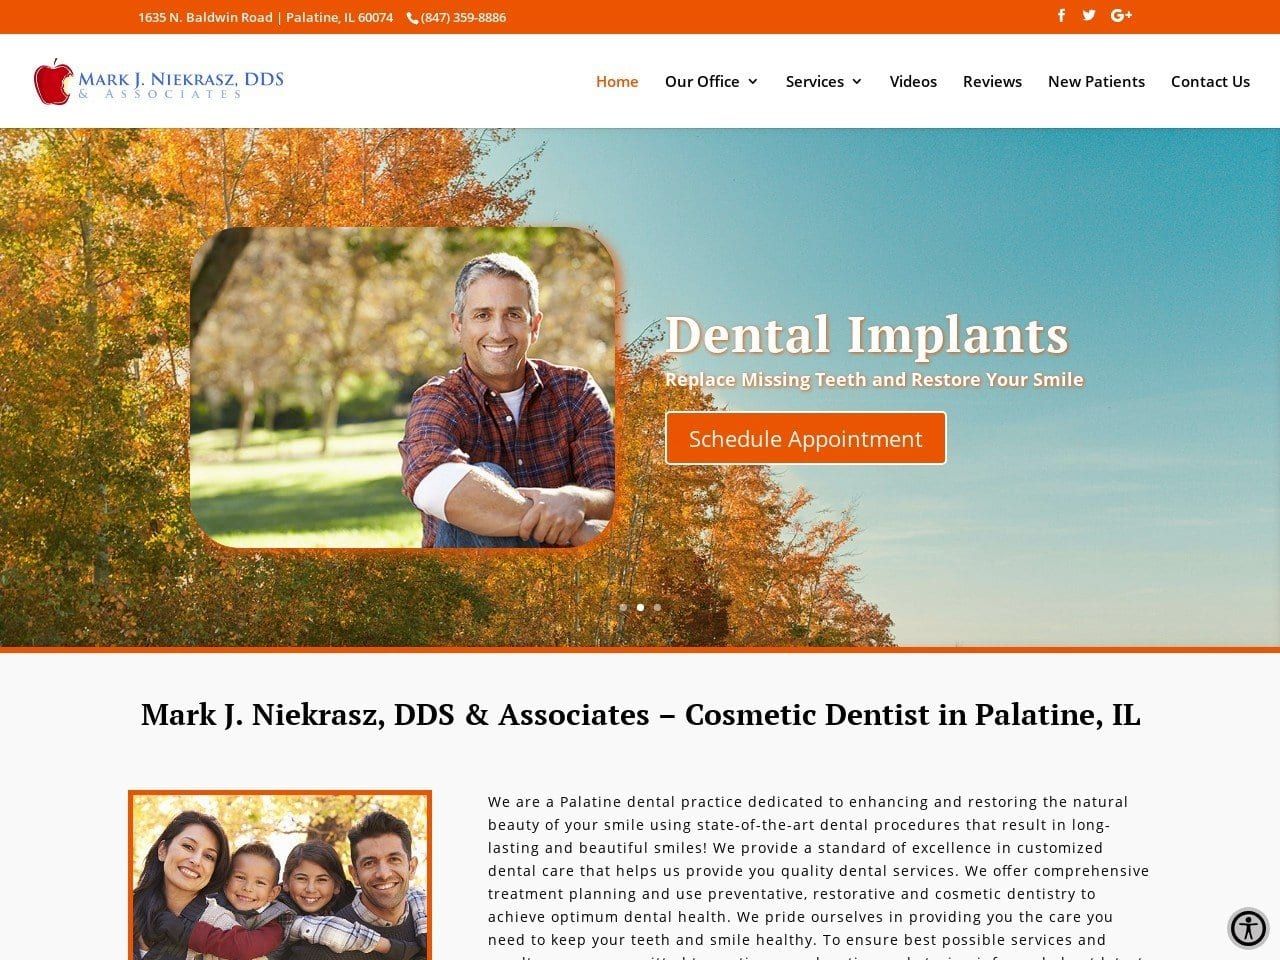 Niekrasz Dentist Website Screenshot from niekraszdentist.com